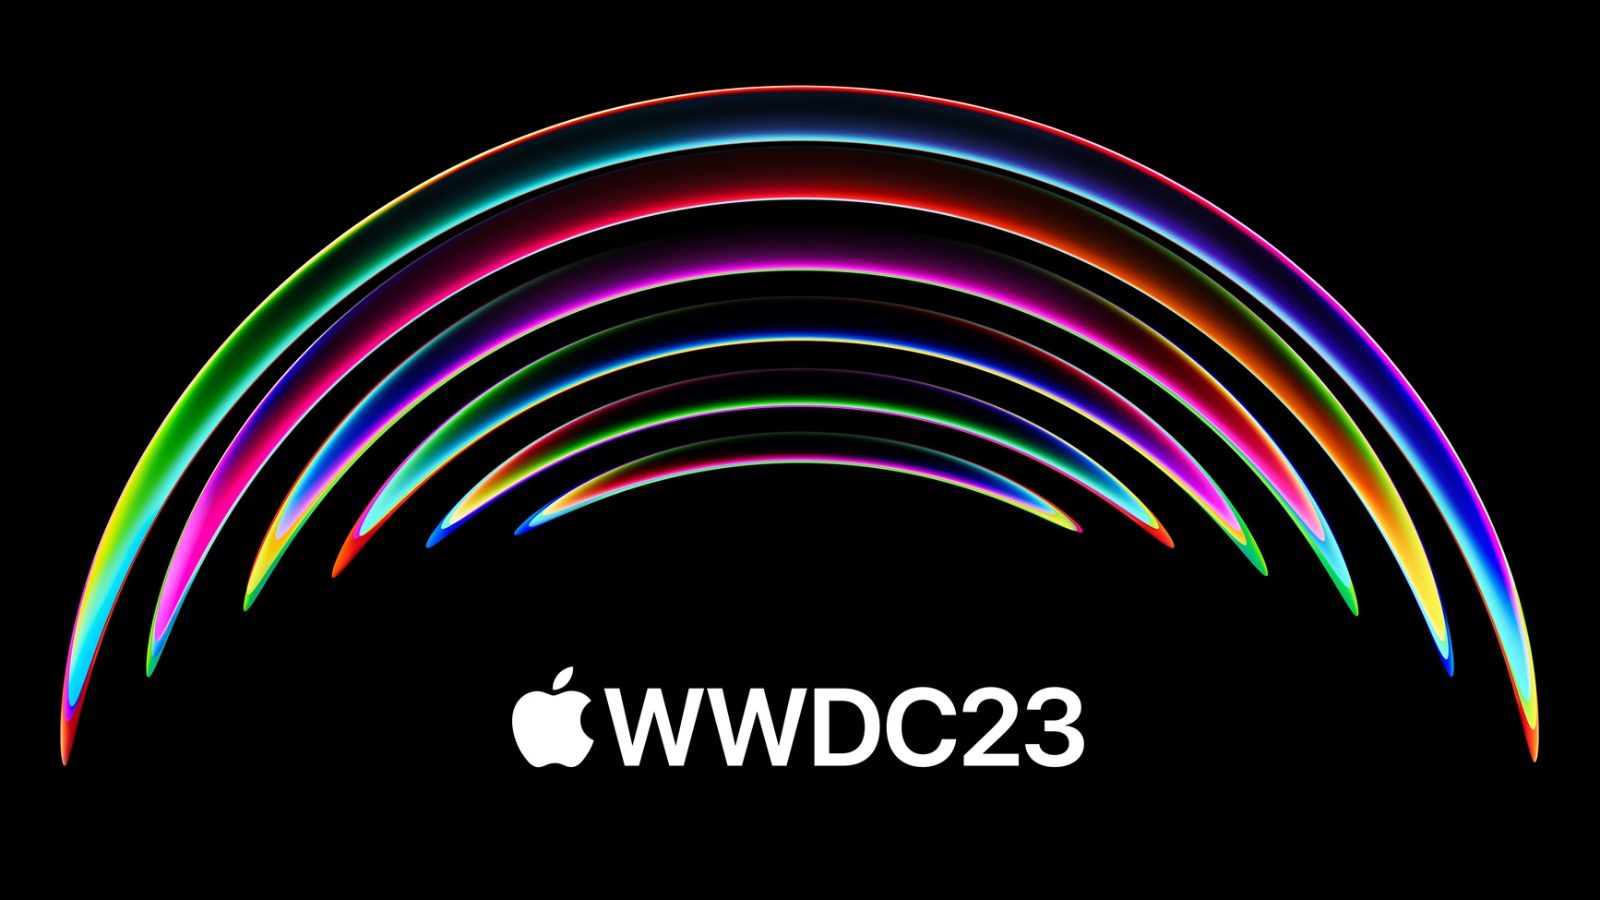 Invite graphics for Apple's WWDC 2023 event